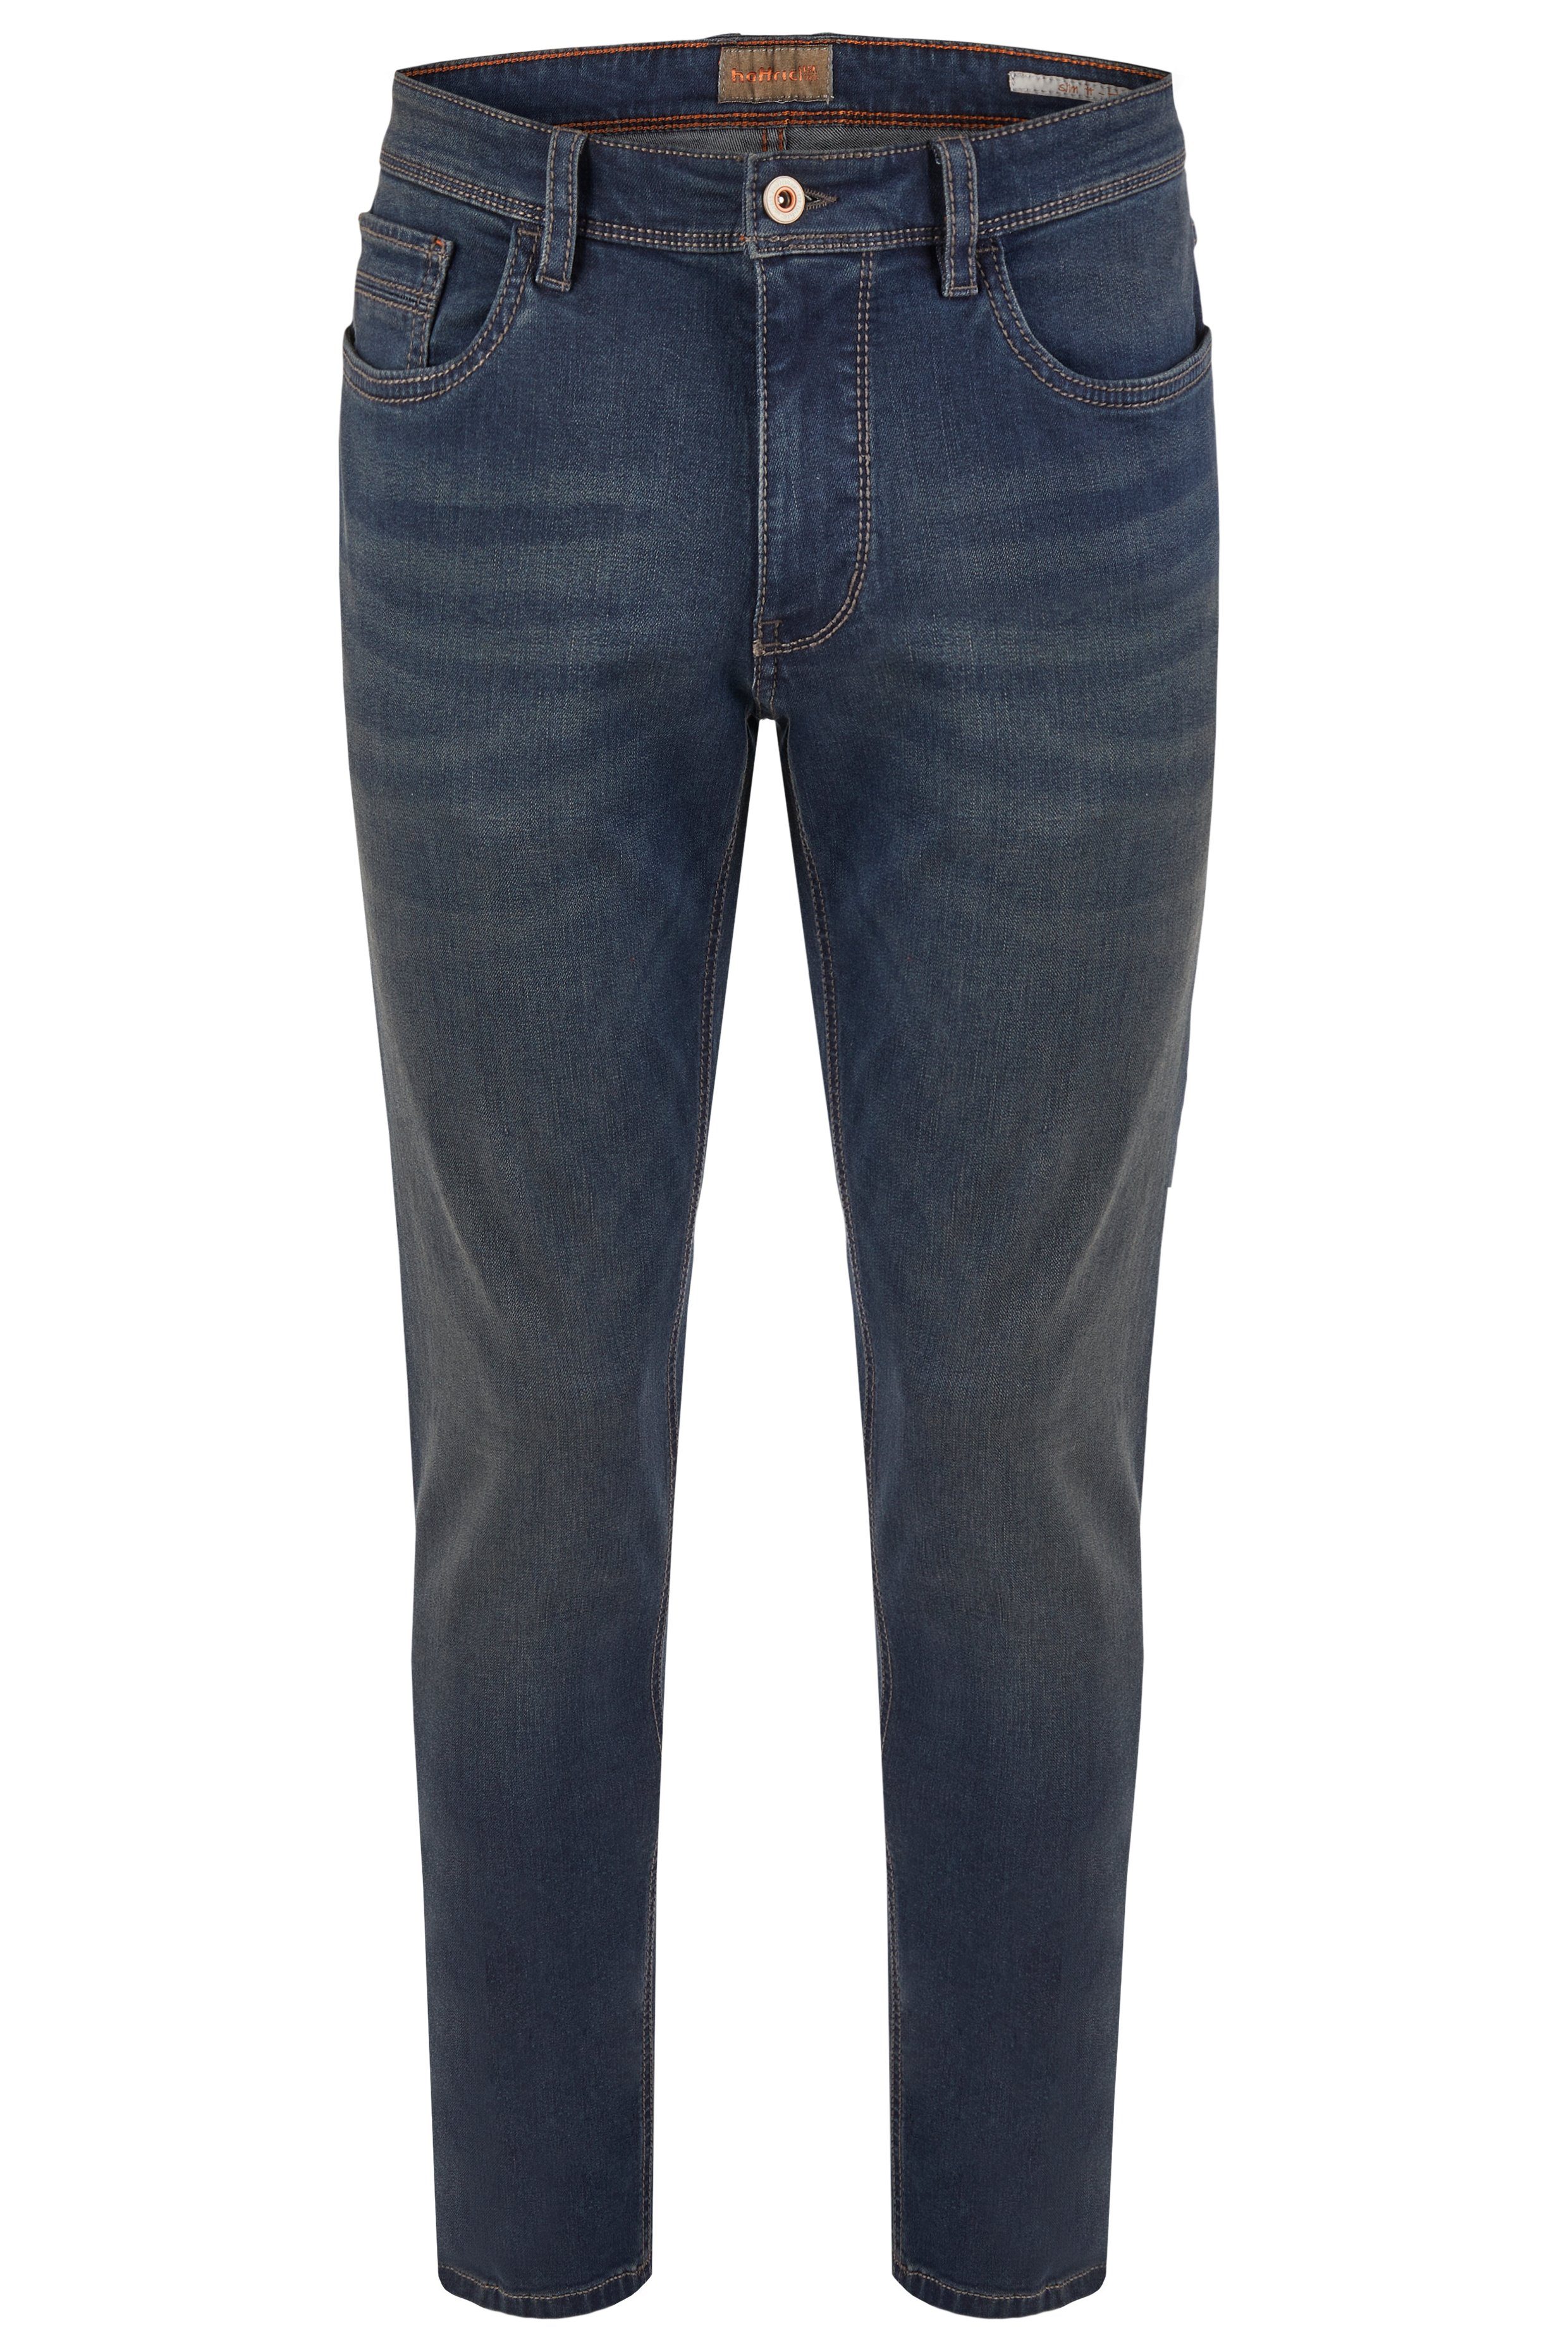 Hattric 5-Pocket-Jeans HATTRIC HARRIS dark blue 688745 6348.46